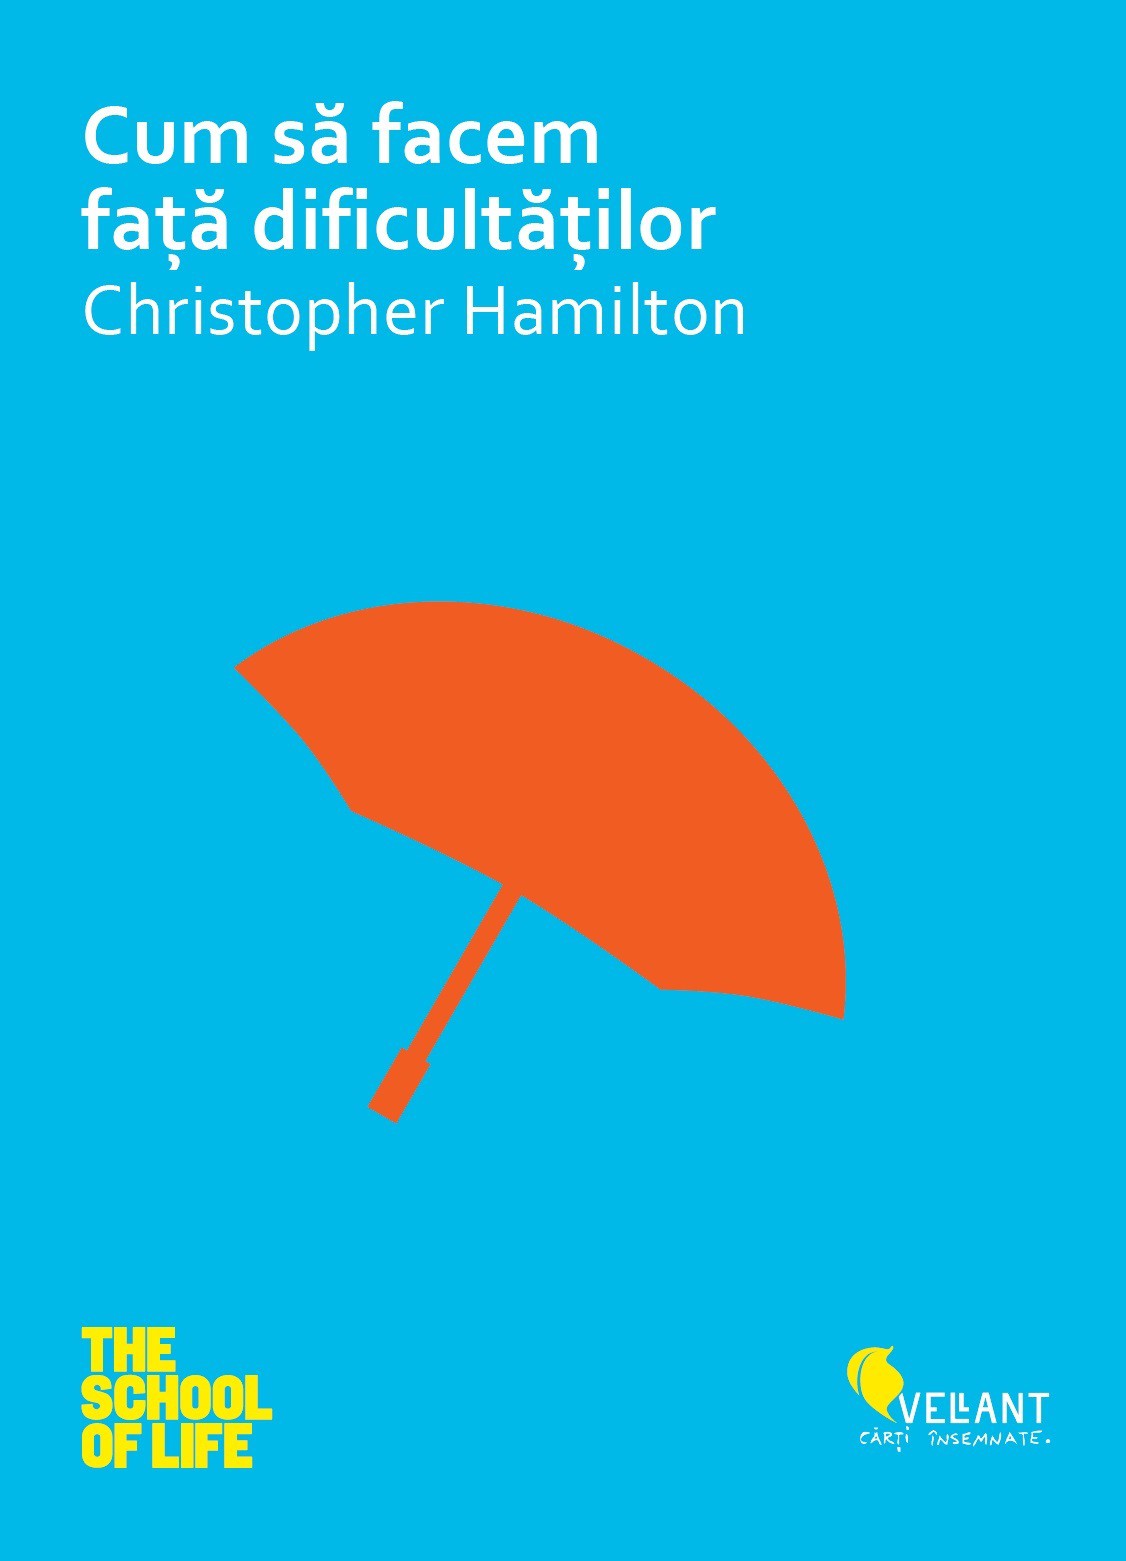 Cum sa facem fata dificultatilor - Christopher Hamilton